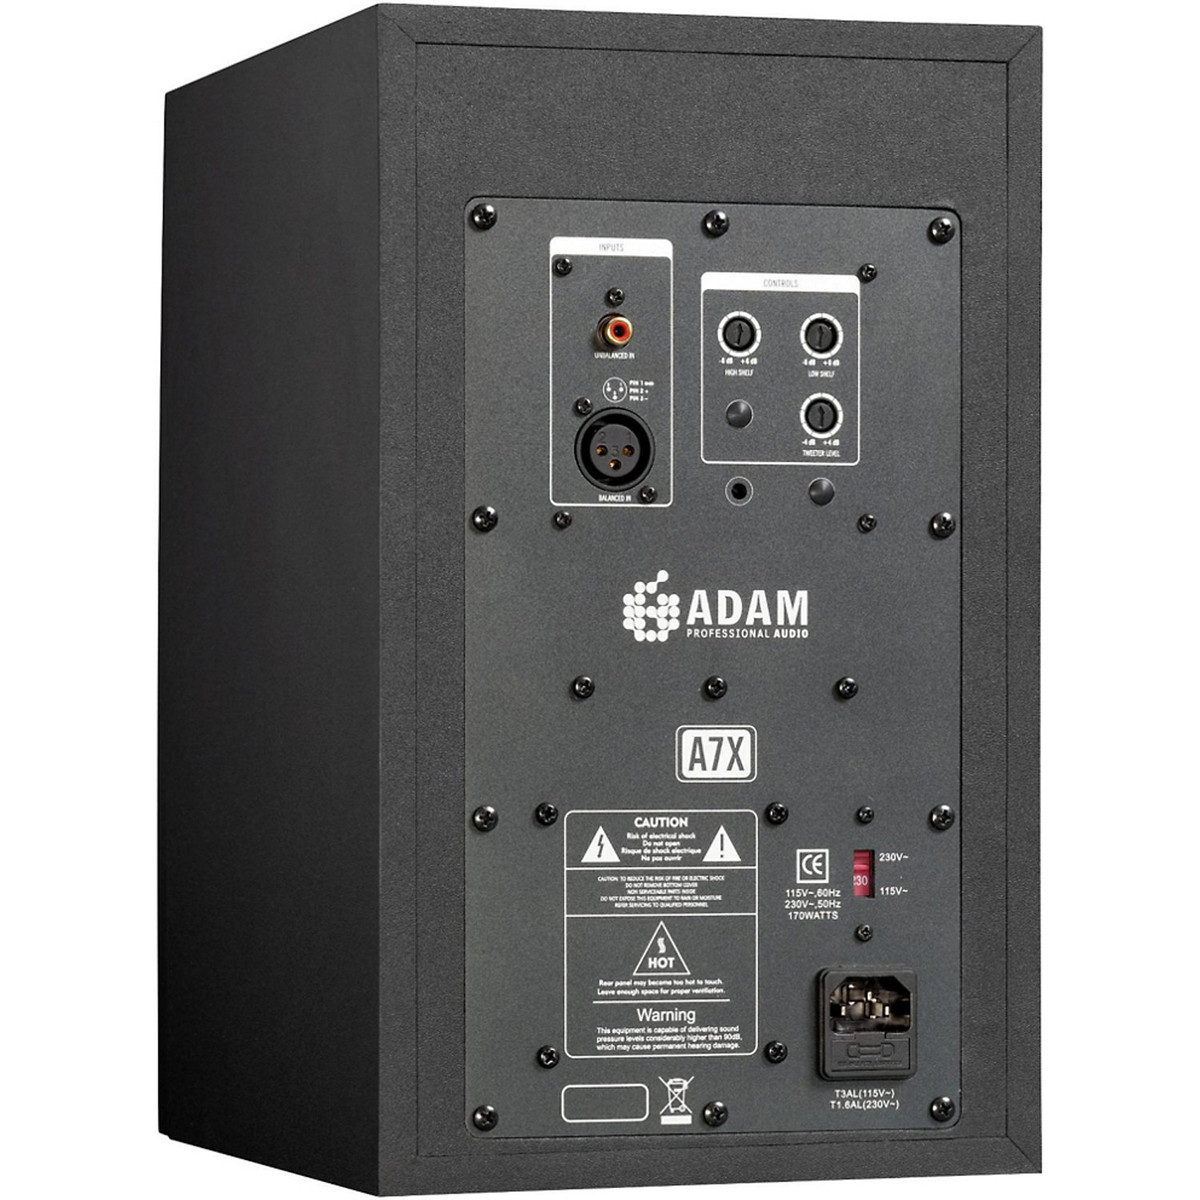 Adam Audio A7X Active Studio Monitor